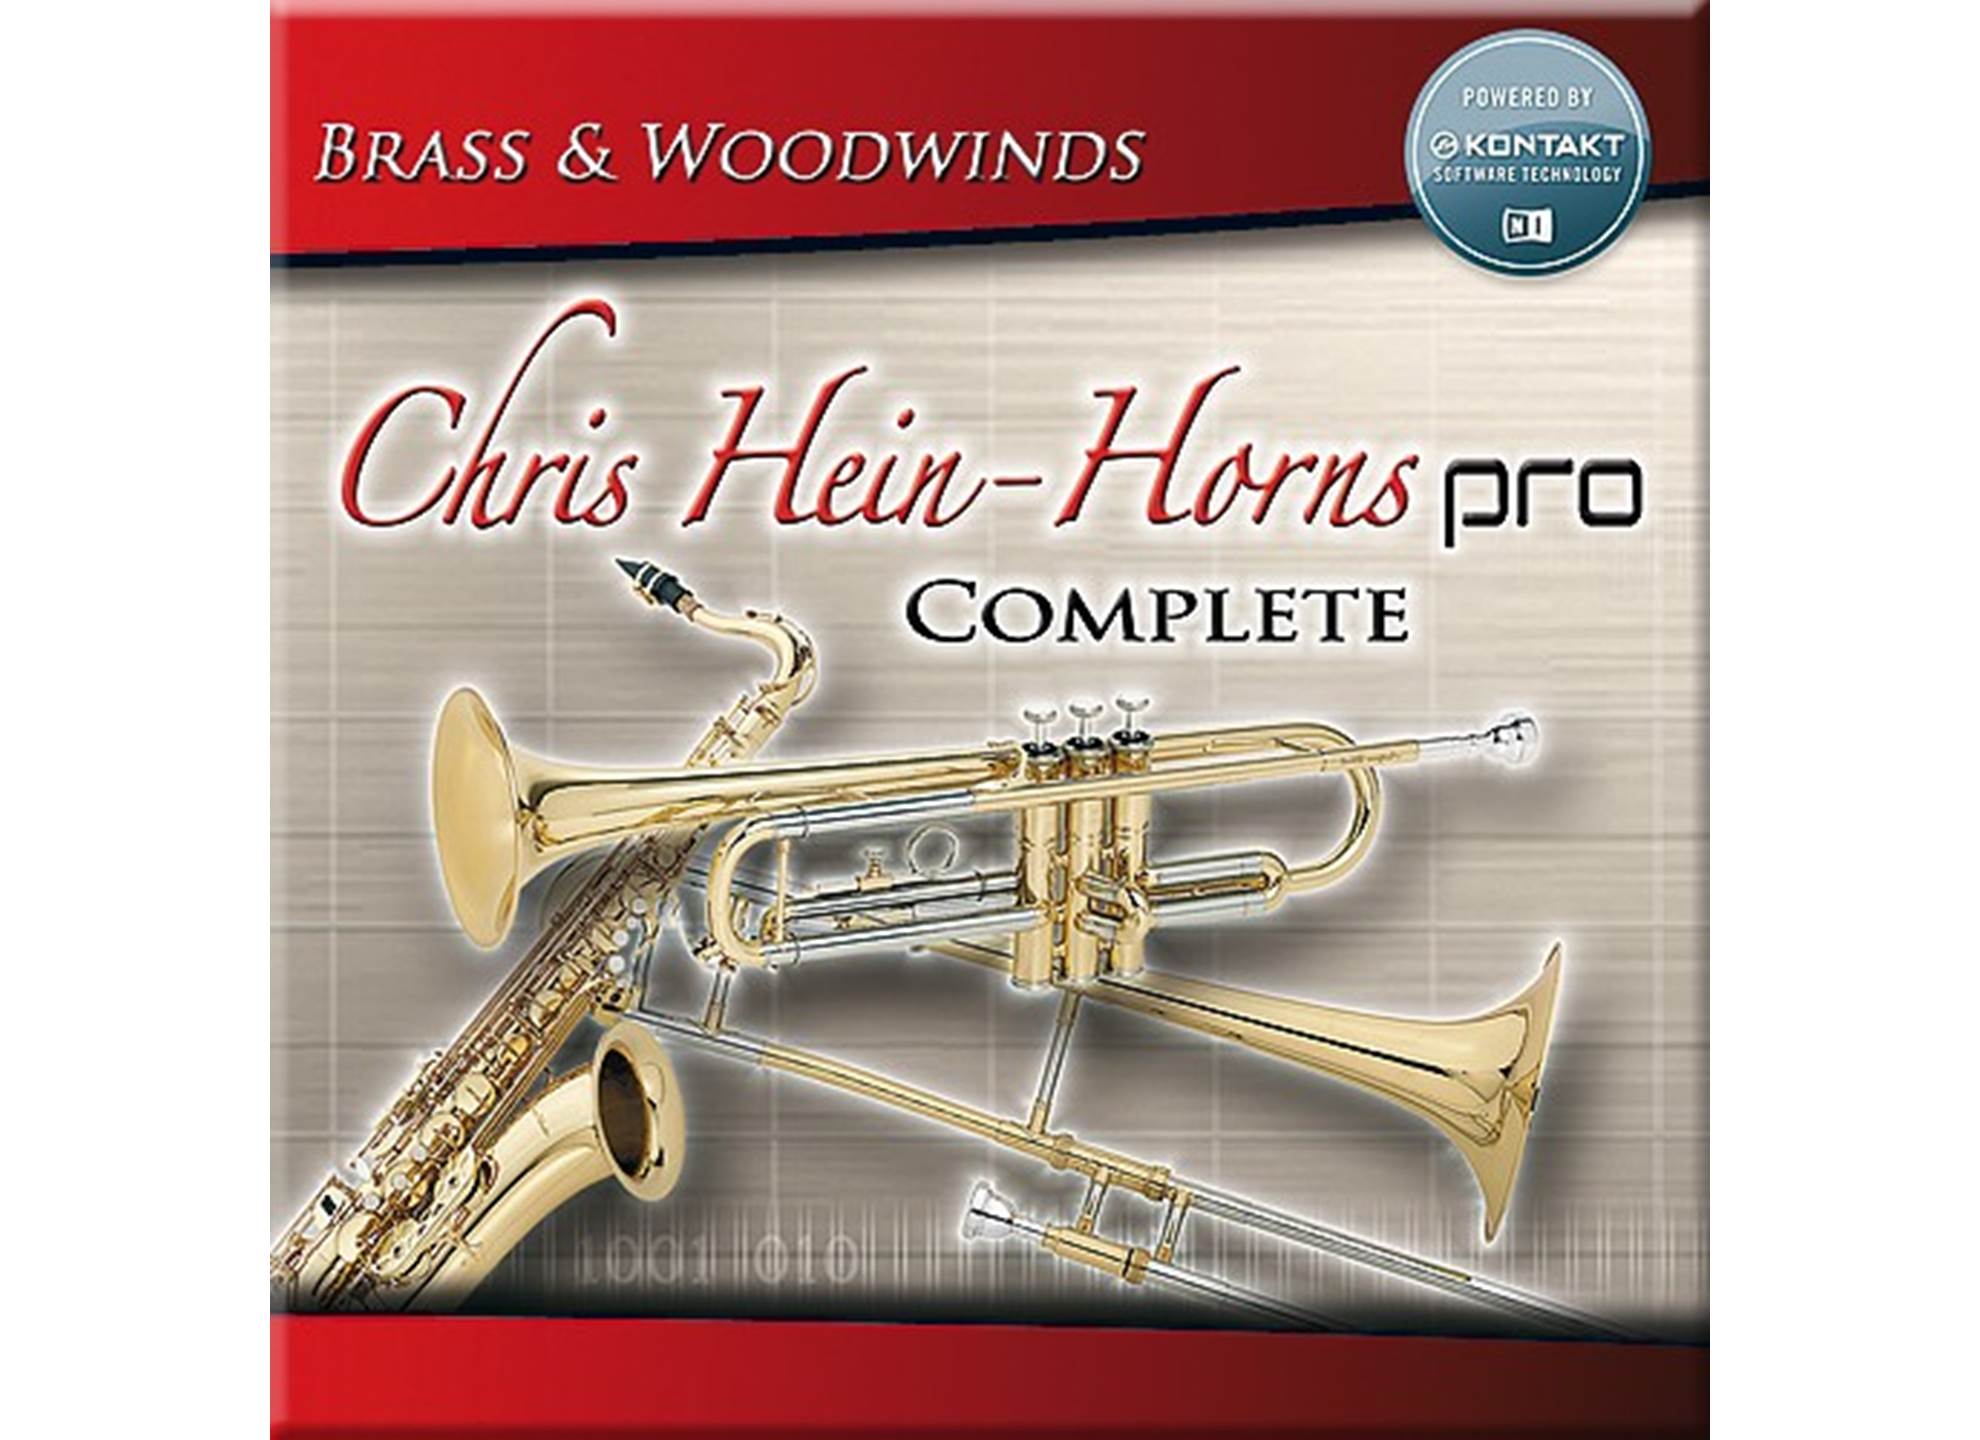 Chris Hein Horns Pro Complete